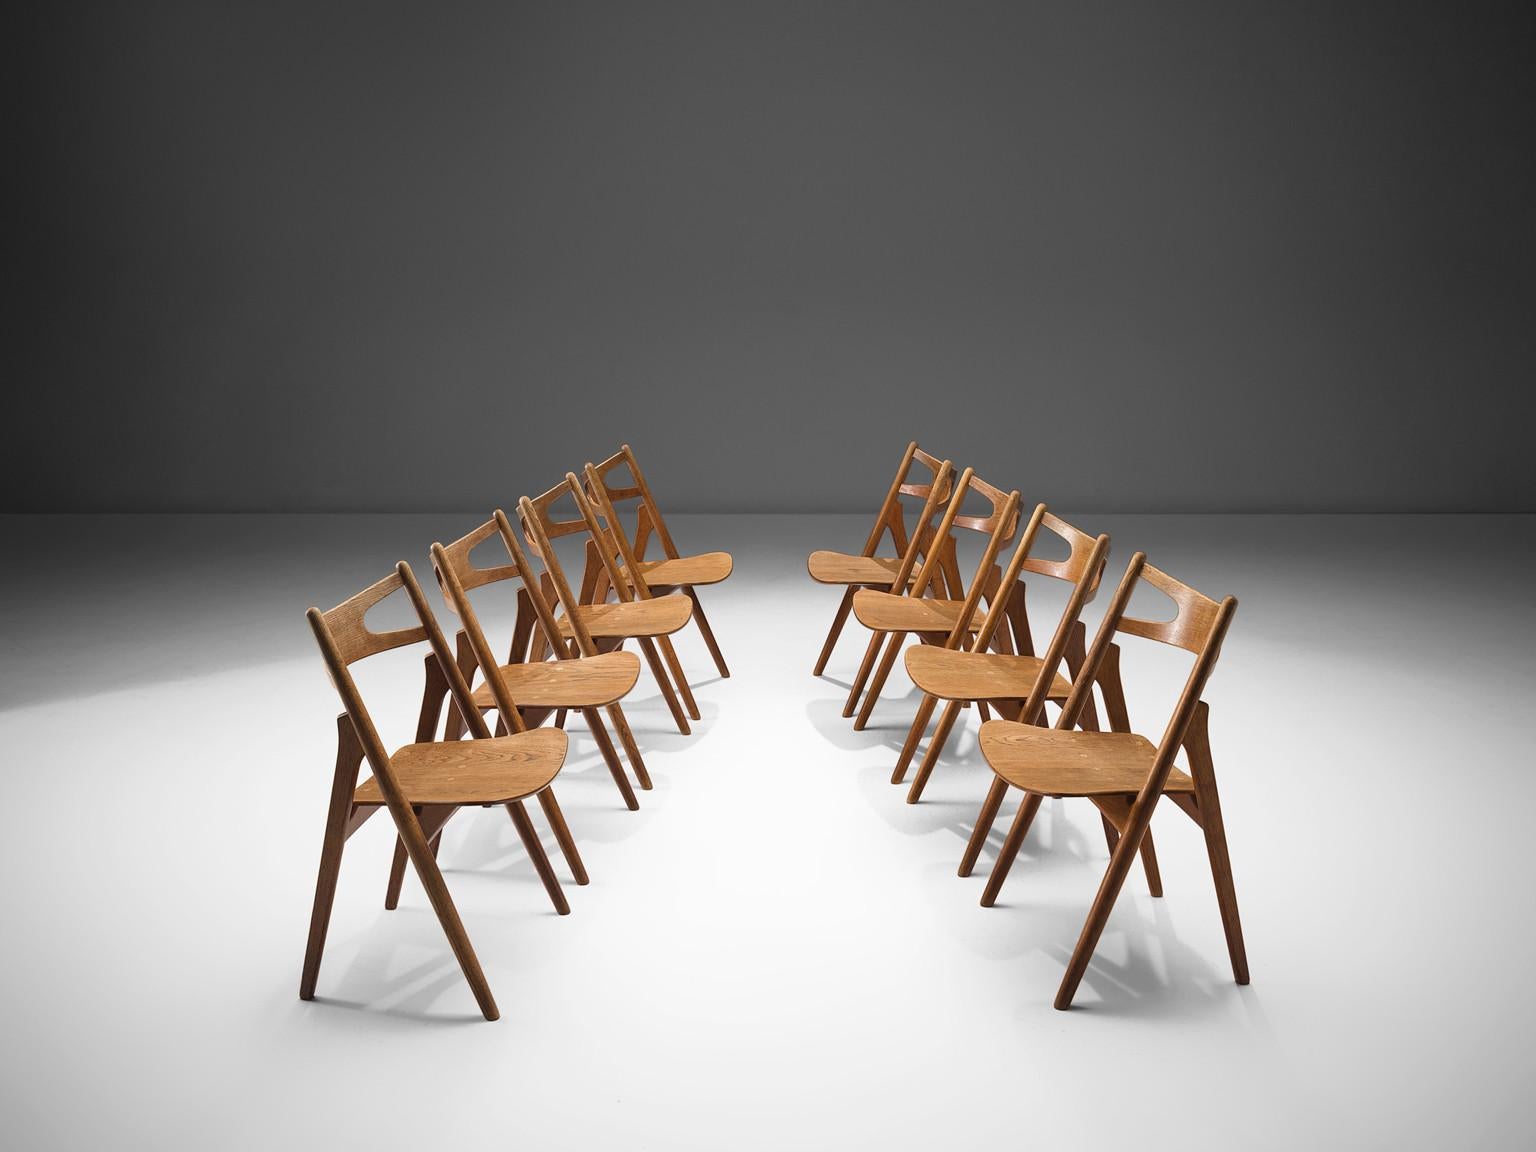 Hans J. Wegner for Carl Hansen & Søn, set of eight 'Sawbuck' CH29 chairs, oak, teak, Denmark, 1952.

This set of eight chairs is designed by Hans J. Wegner for Carl Hansen. This chair holds a very strong construction even though it has a simplistic